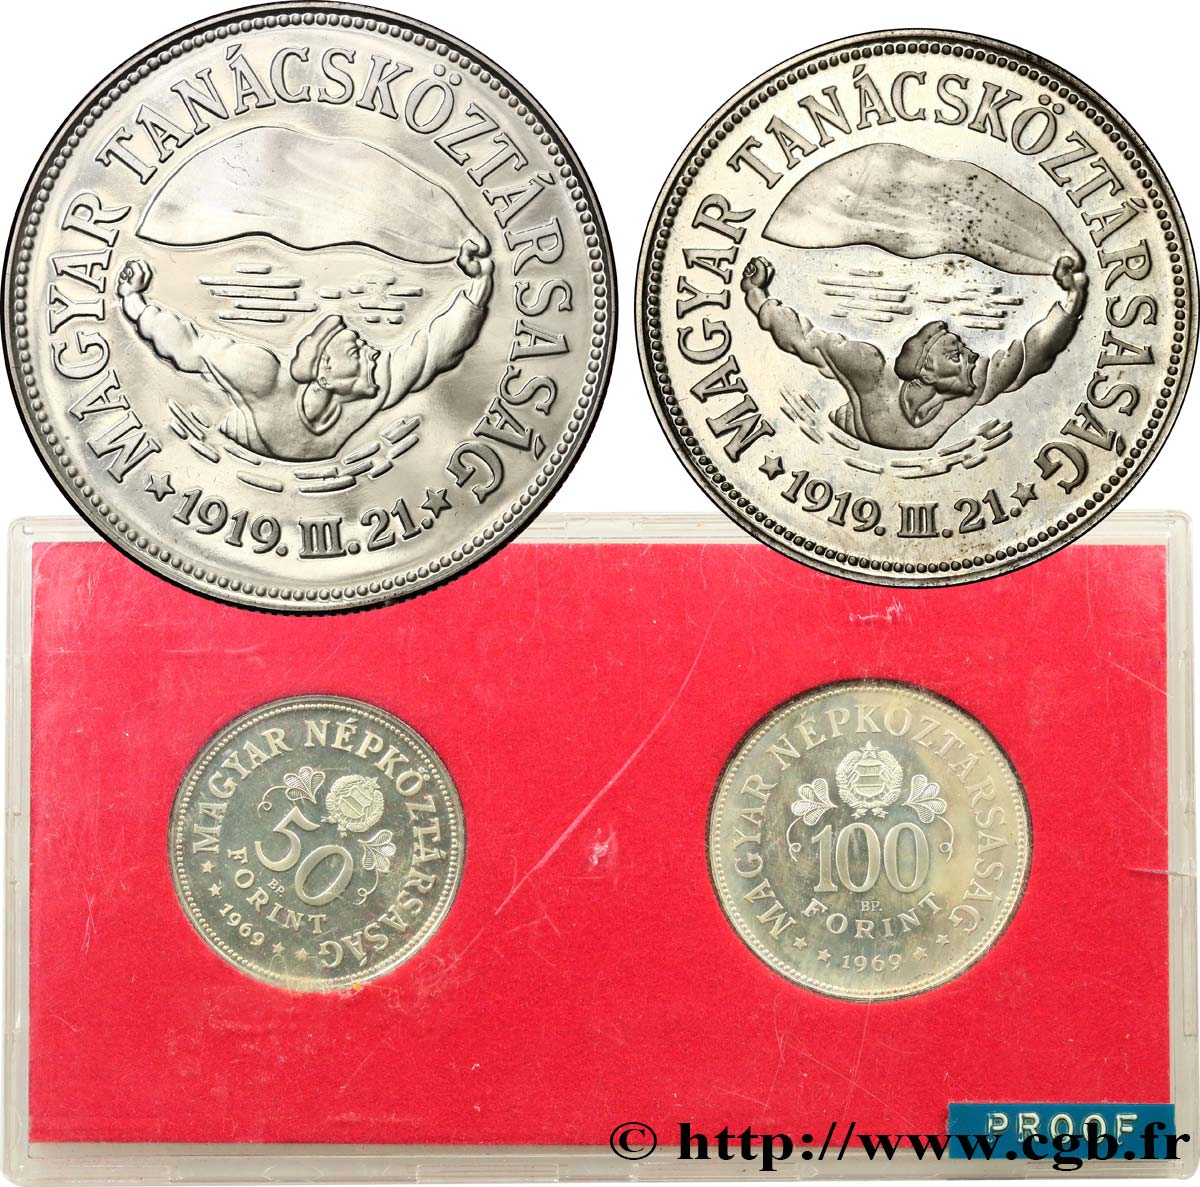 HUNGRíA Série Proof - 2 monnaies - 50e anniversaire des soviets du 31 mars 1919 1969 Budapest Prueba 